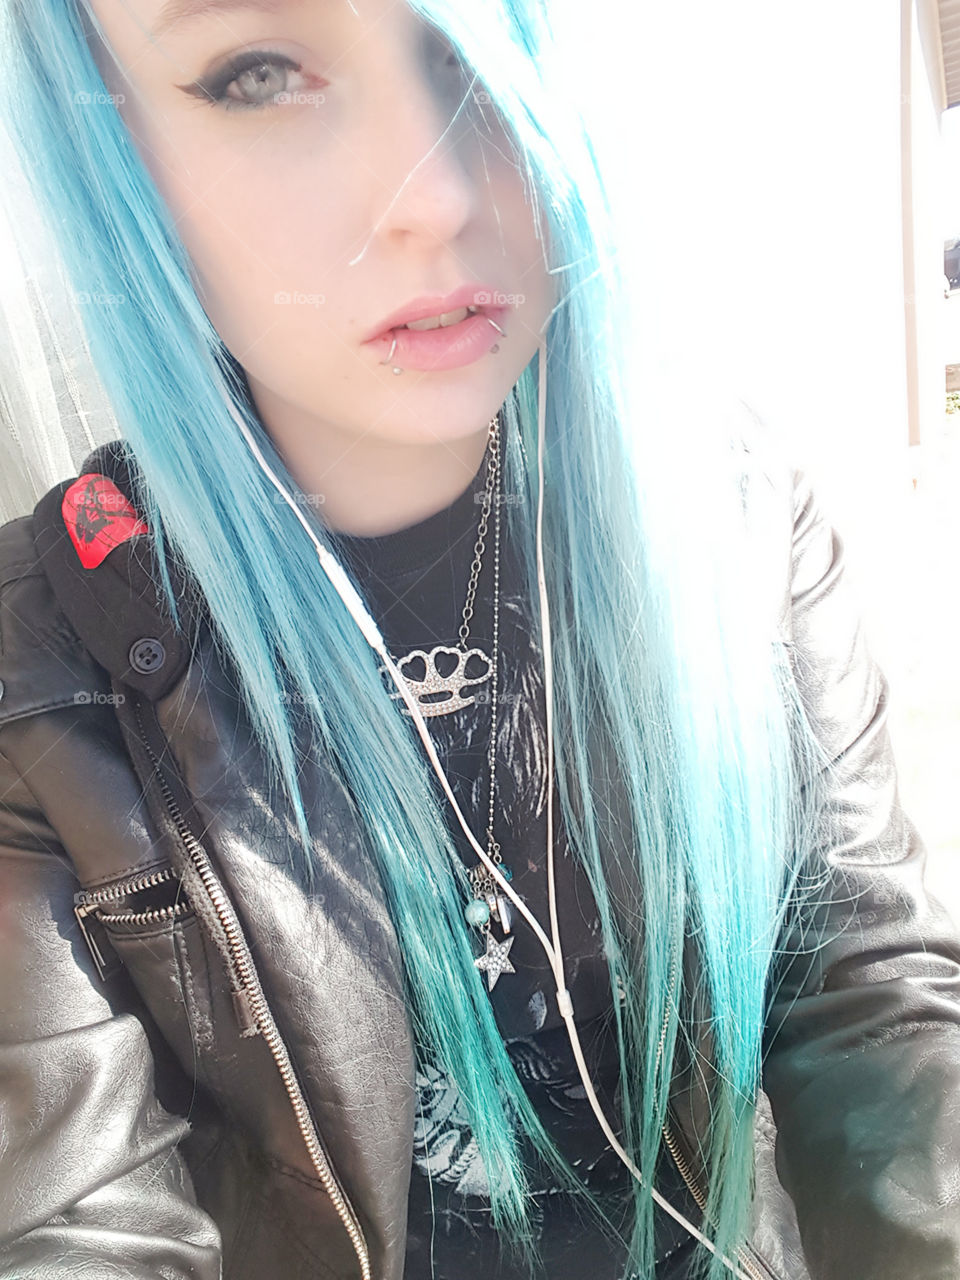 Selfie with blue hair